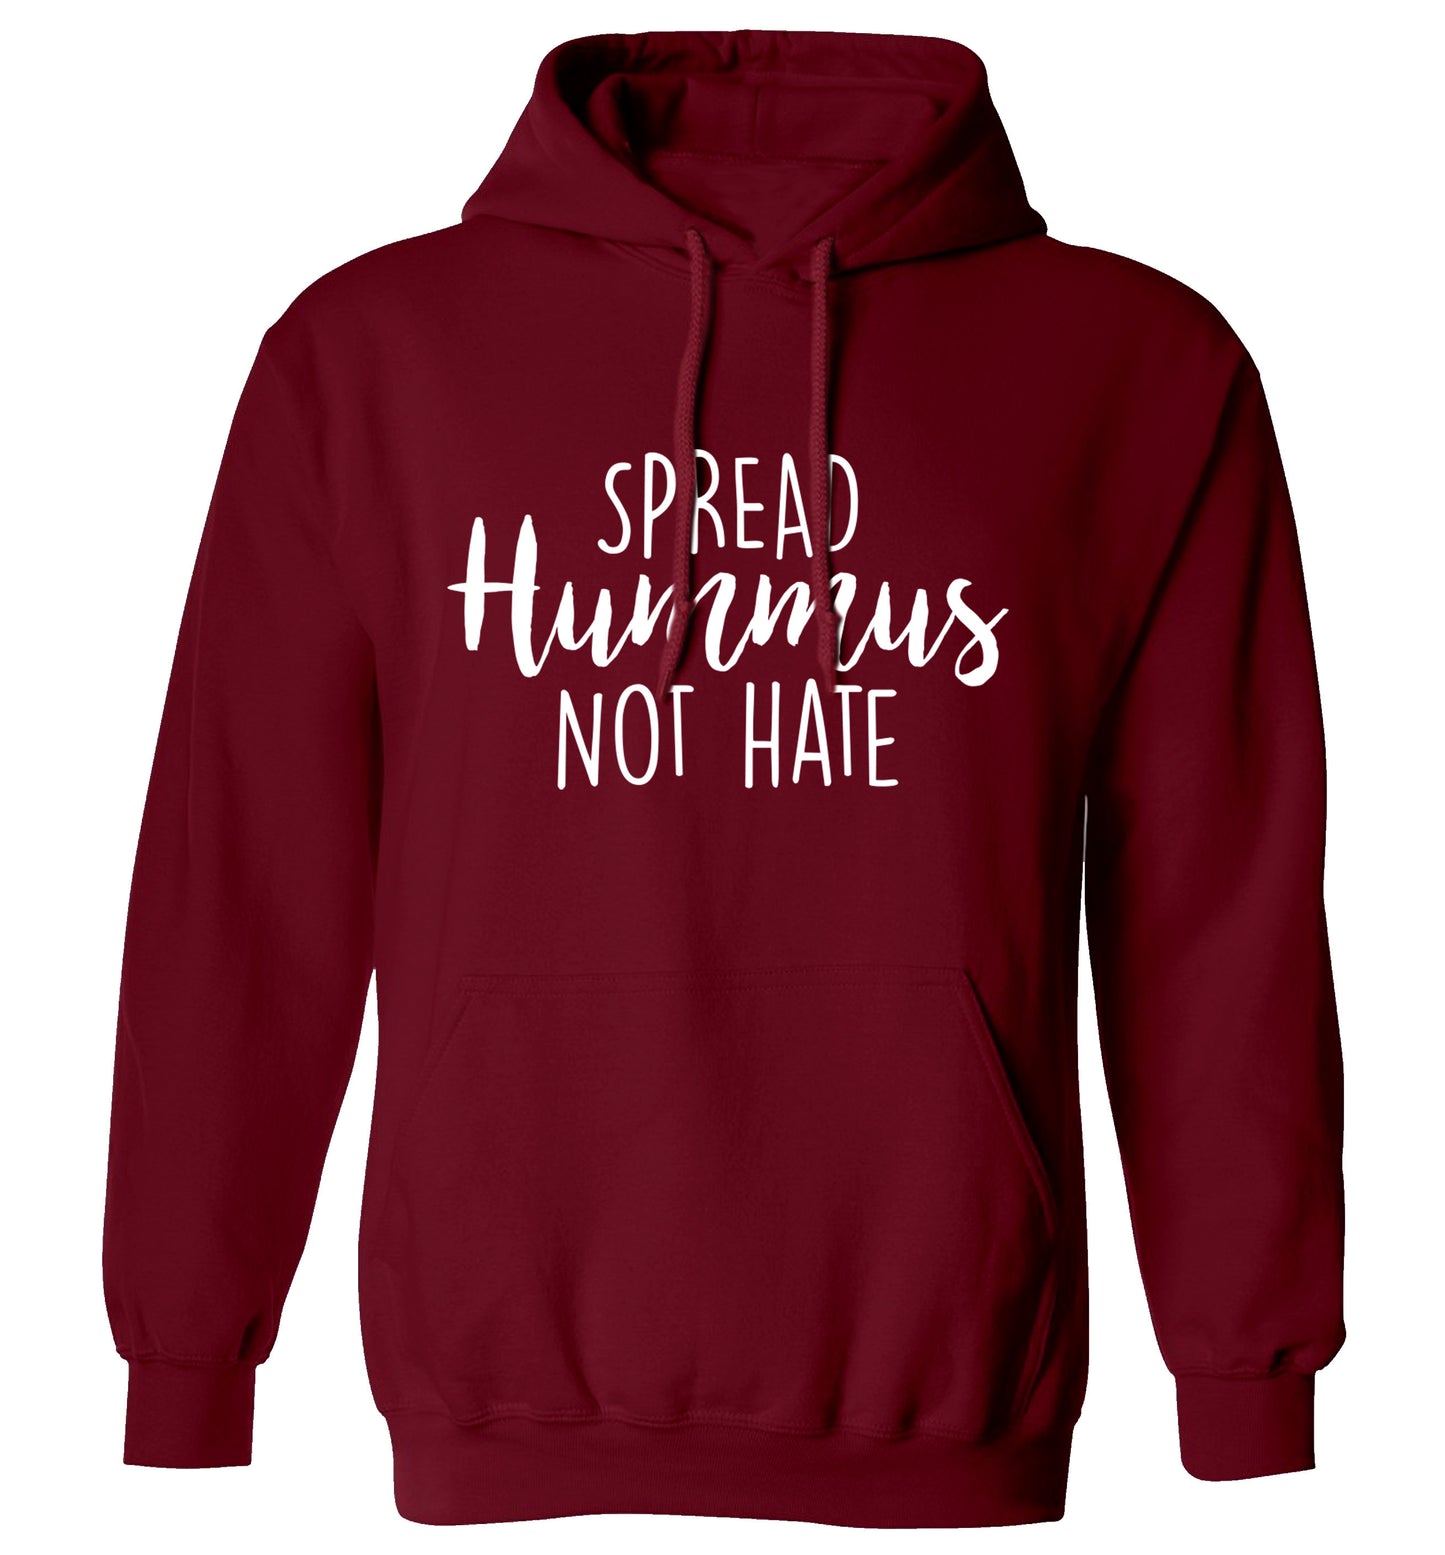 Spread hummus not hate script text adults unisex maroon hoodie 2XL